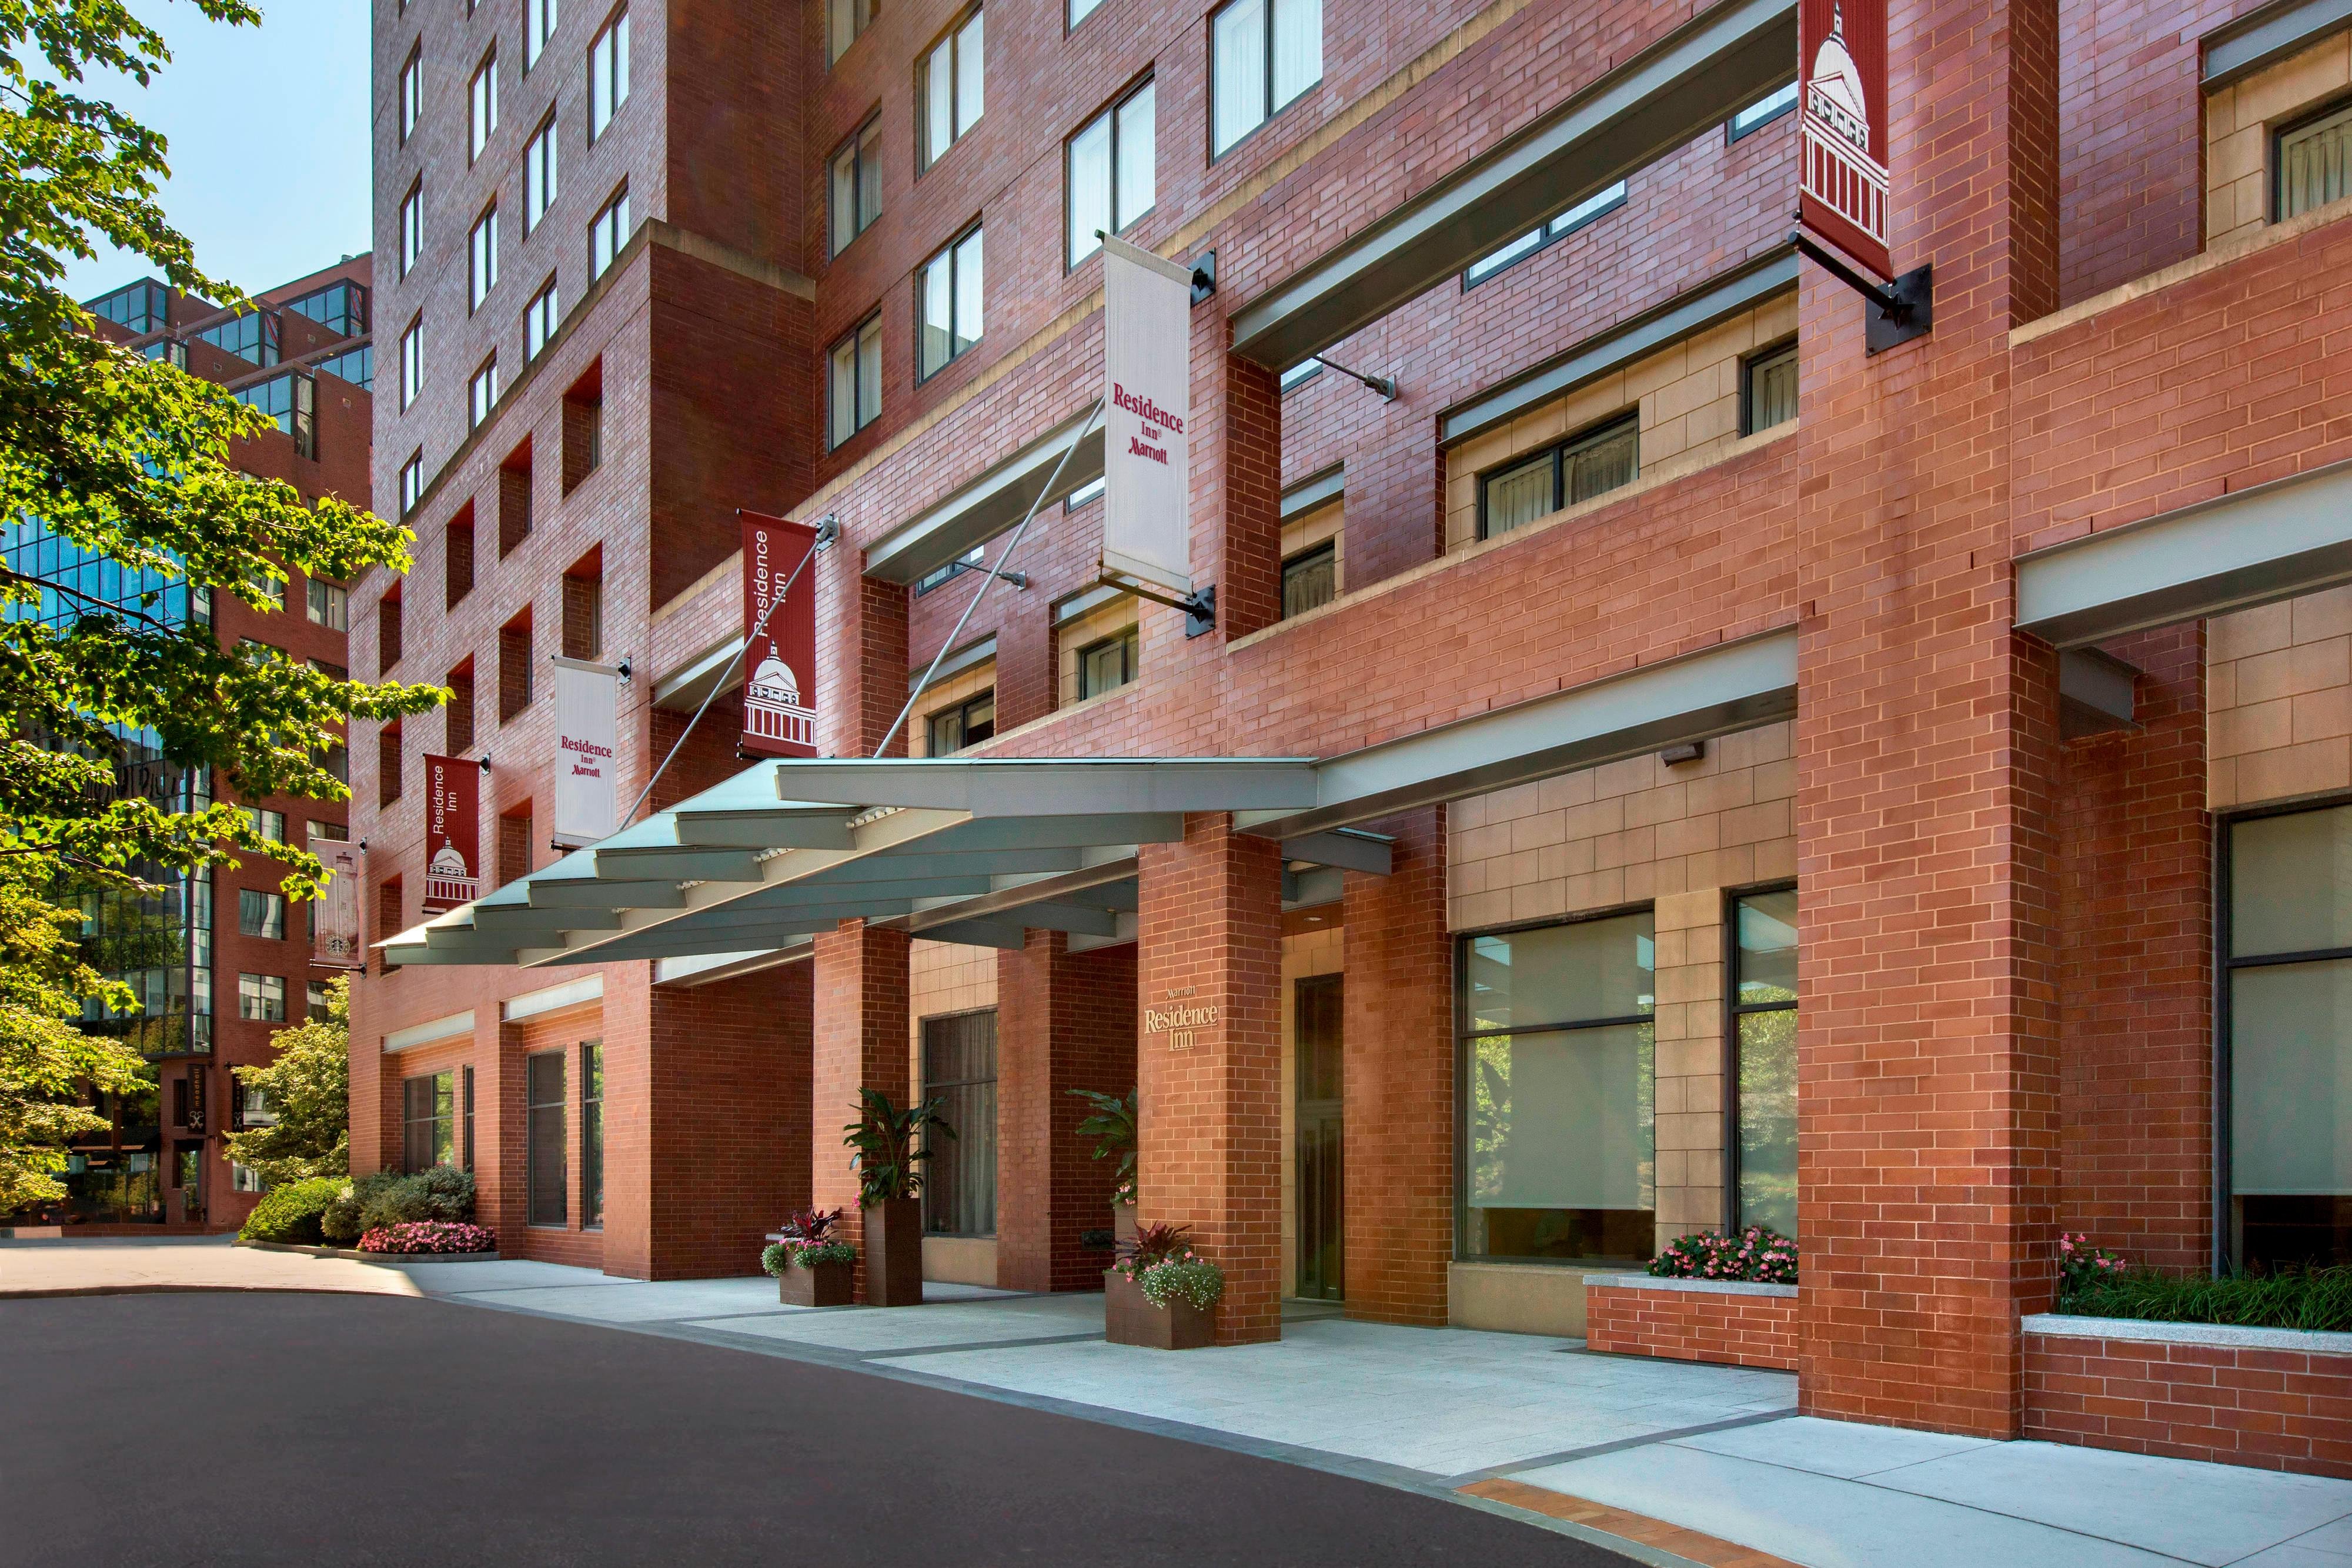 Residence Inn Boston Cambridge- First Class Cambridge, MA Hotels- GDS